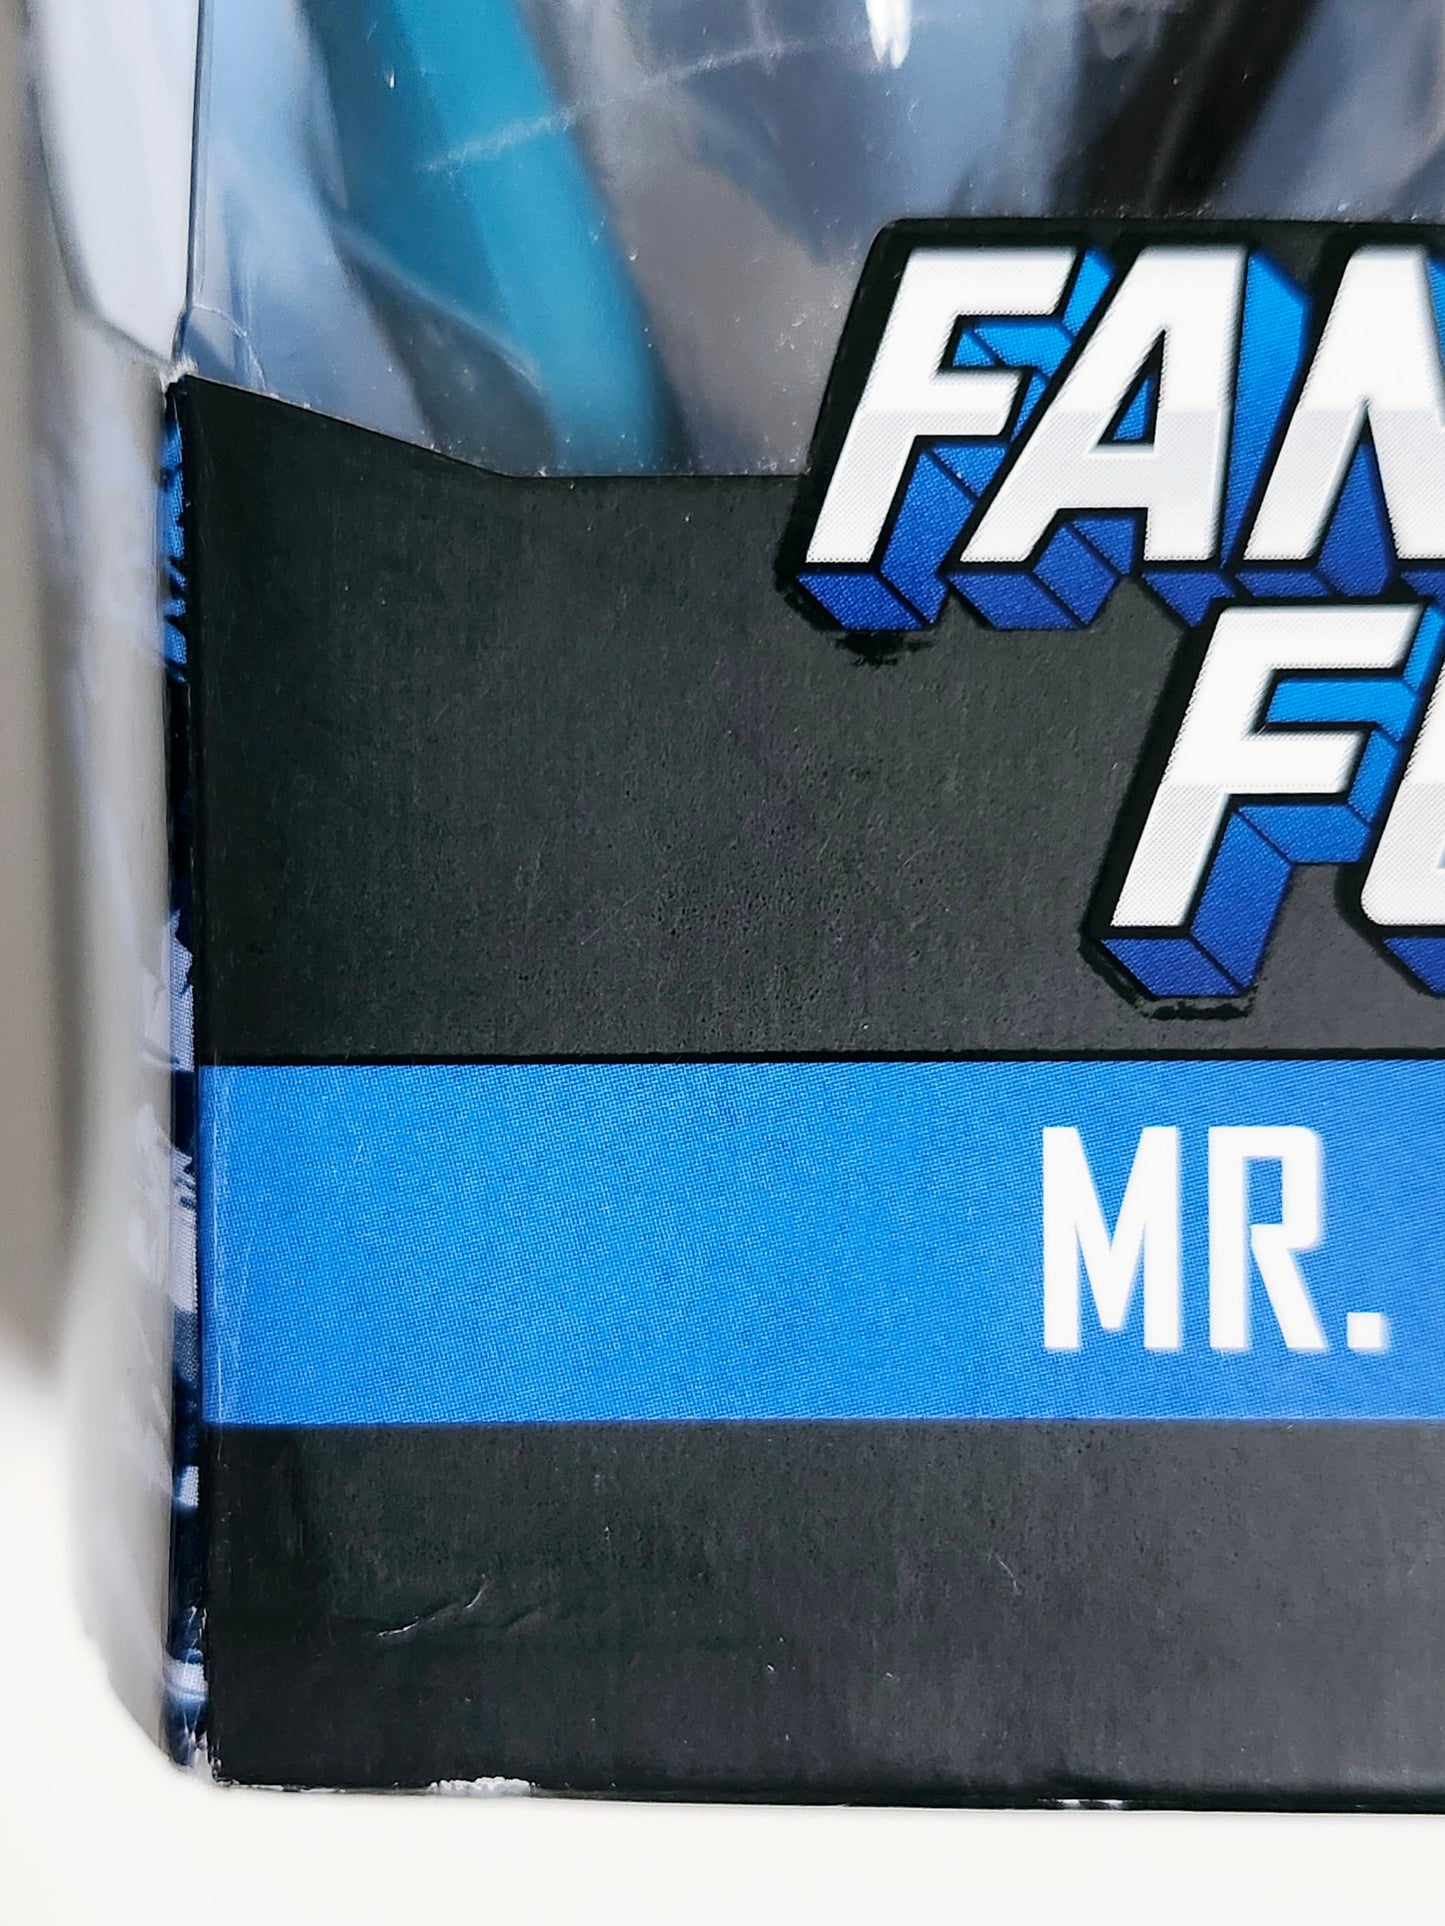 Marvel Legends Exclusive Mr. Fantastic 6-Inch Action Figure